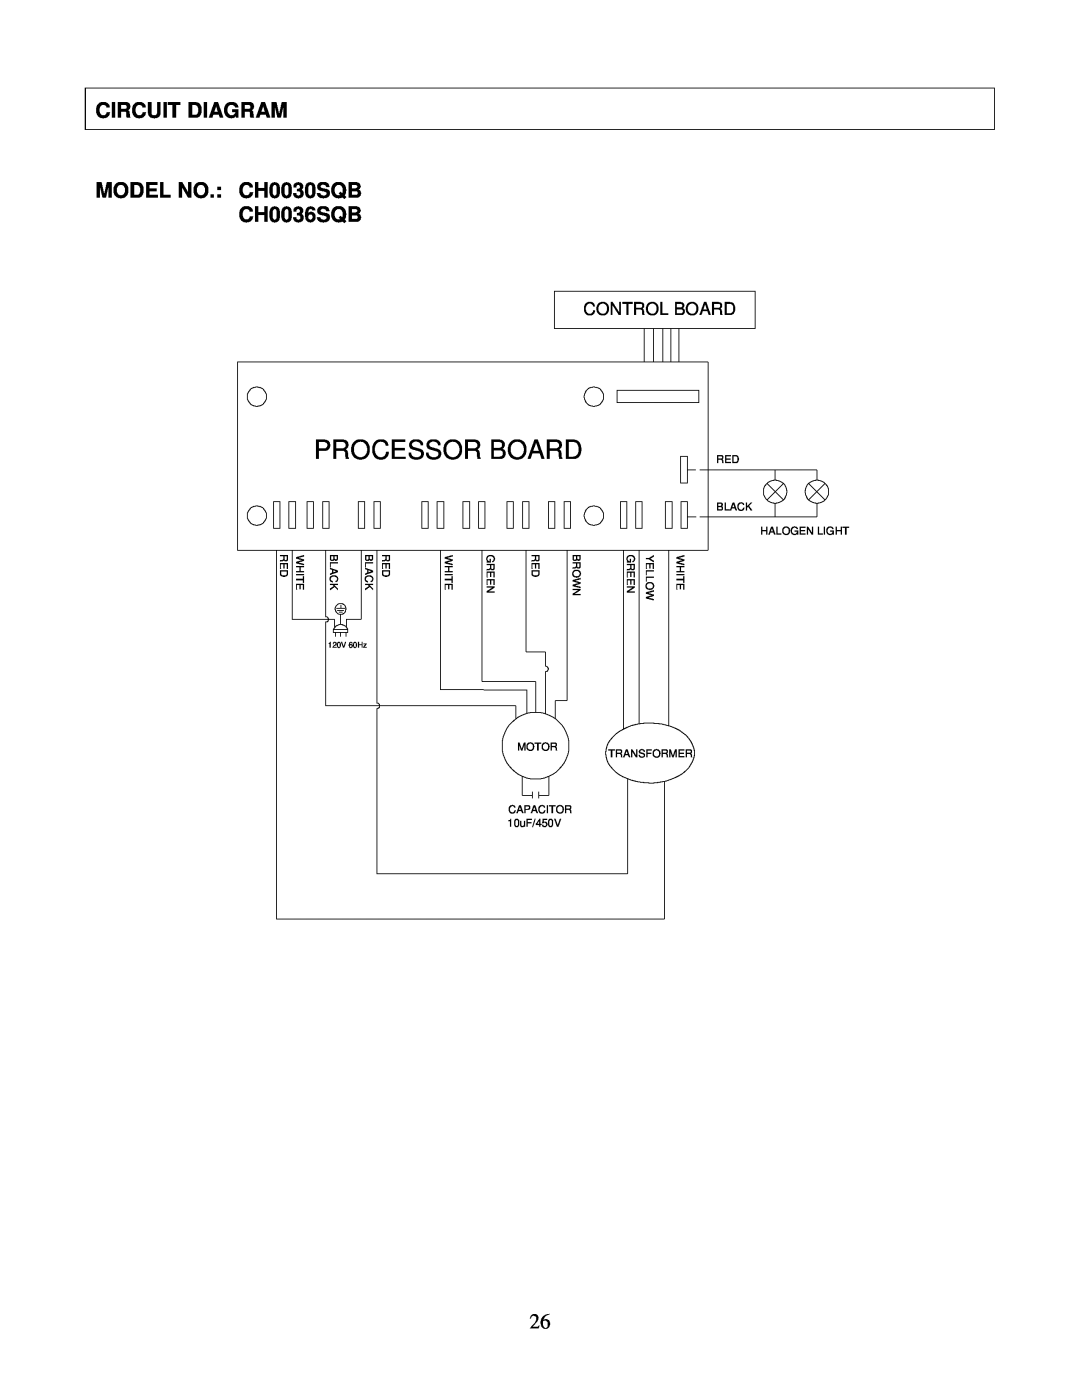 Kobe Range Hoods CH0030SQB (30") manual Circuit Diagram, MODEL NO. CH0030SQB CH0036SQB, Processor Board, Control Board 